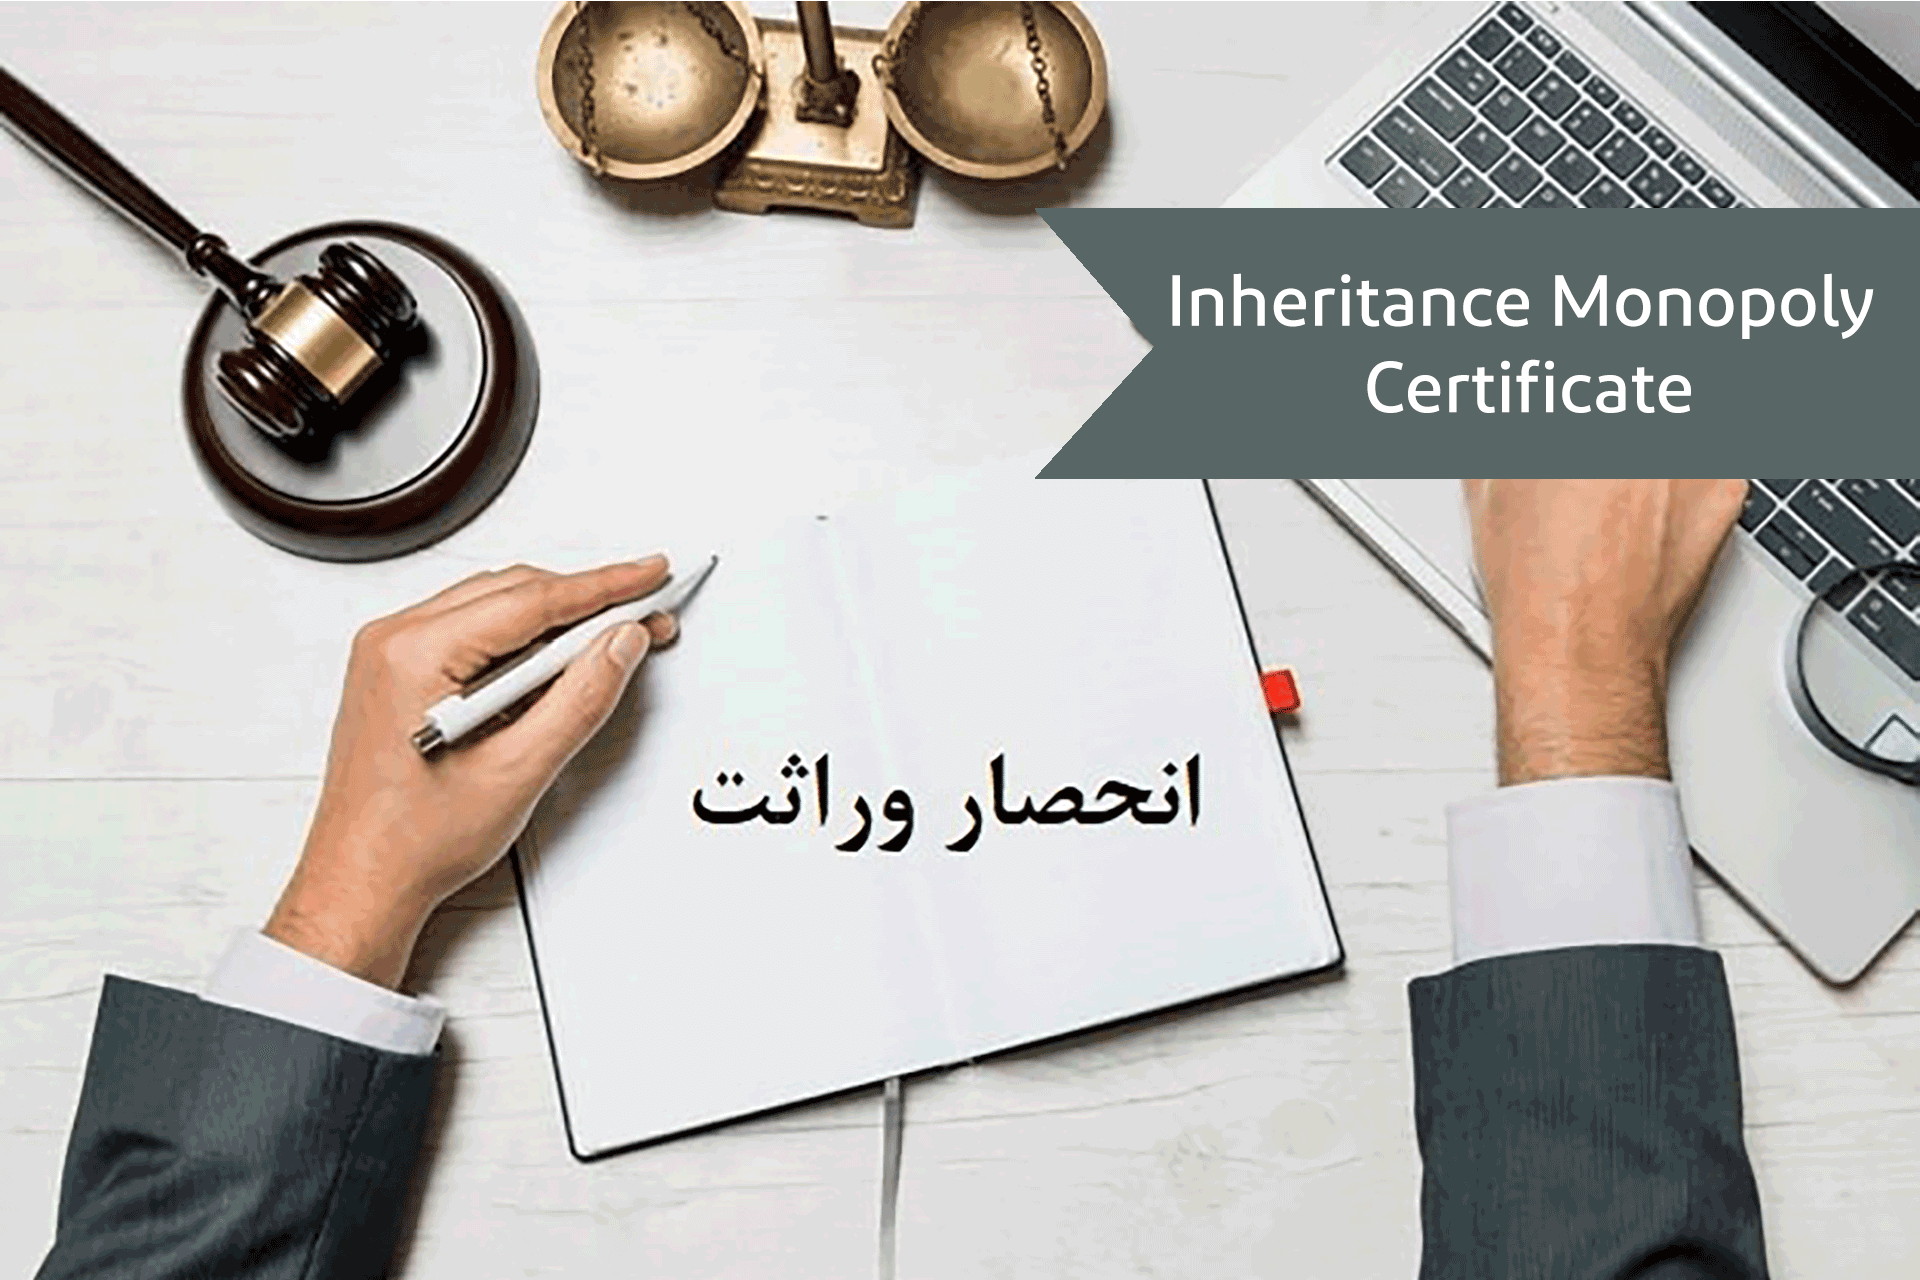 Inheritance Monopoly certificate